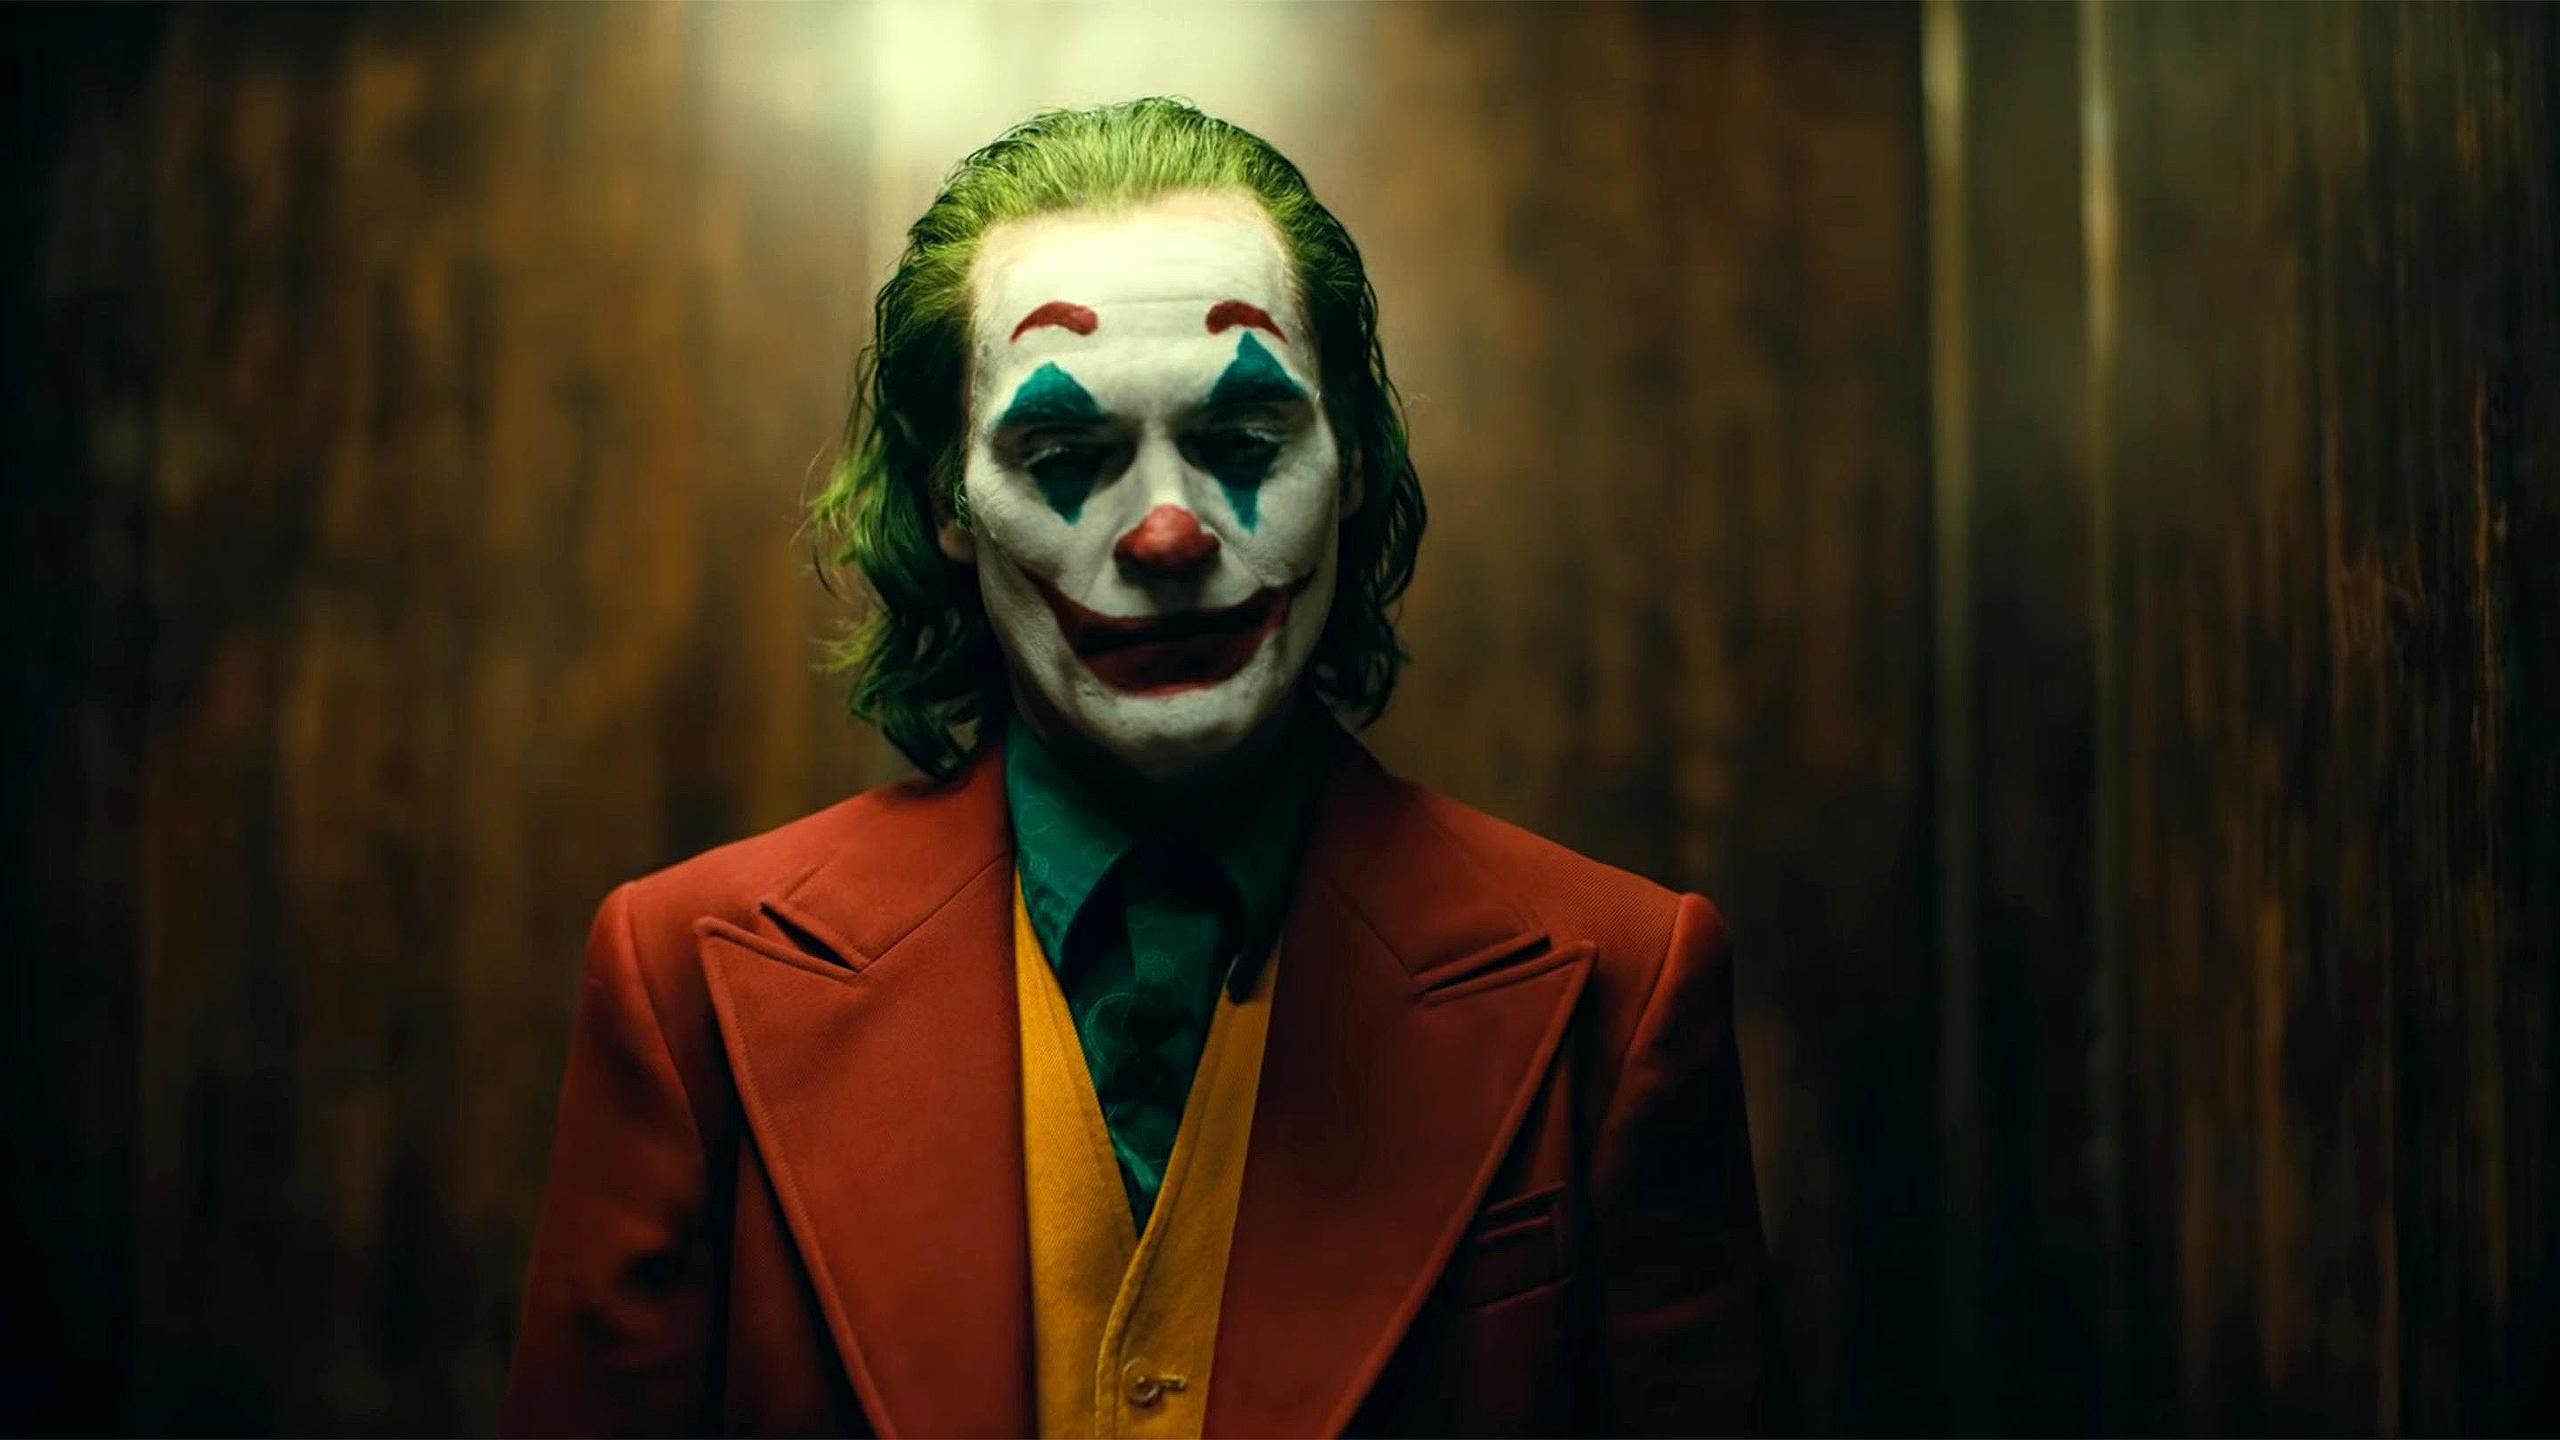 Joaquin Phoenix As Joker Wallpaper, HD Movies 4K Wallpaper, Image, Photo and Background